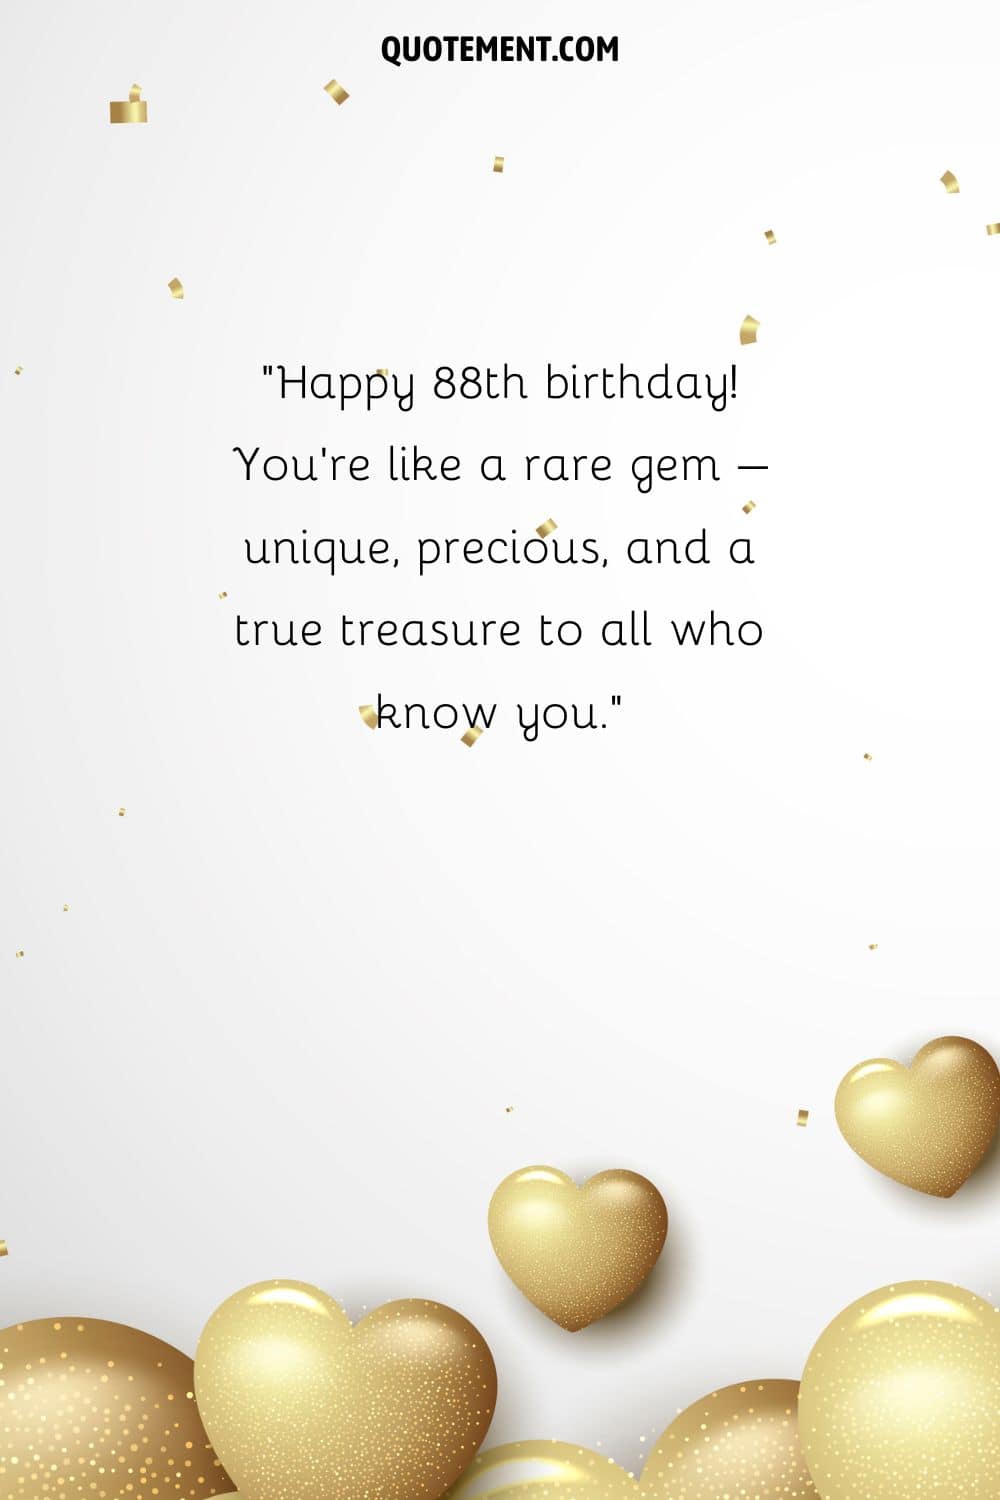 Happy 88th birthday! You're like a rare gem – unique, precious, and a true treasure to all who know you.